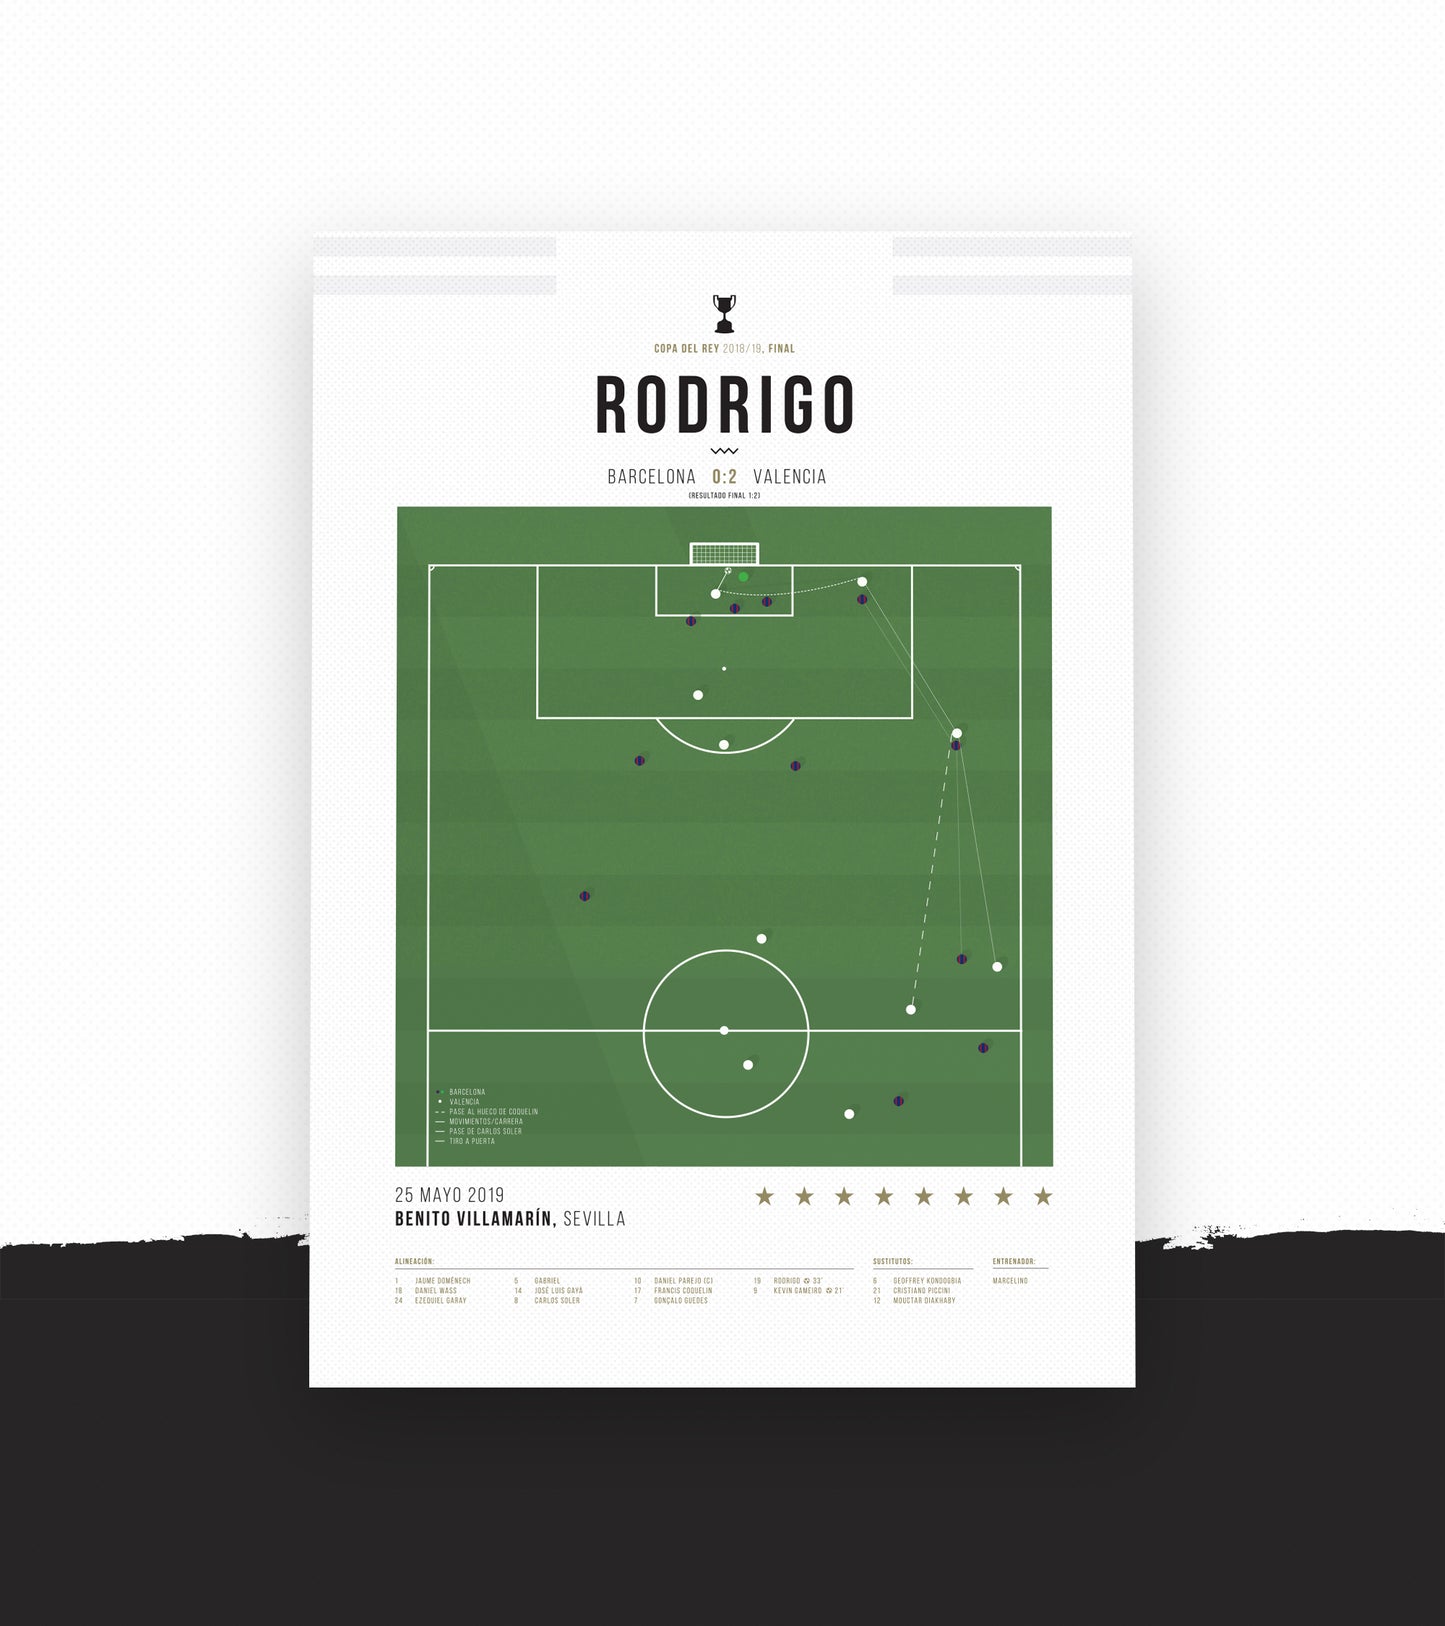 Gol de Rodrigo en la Final de Copa